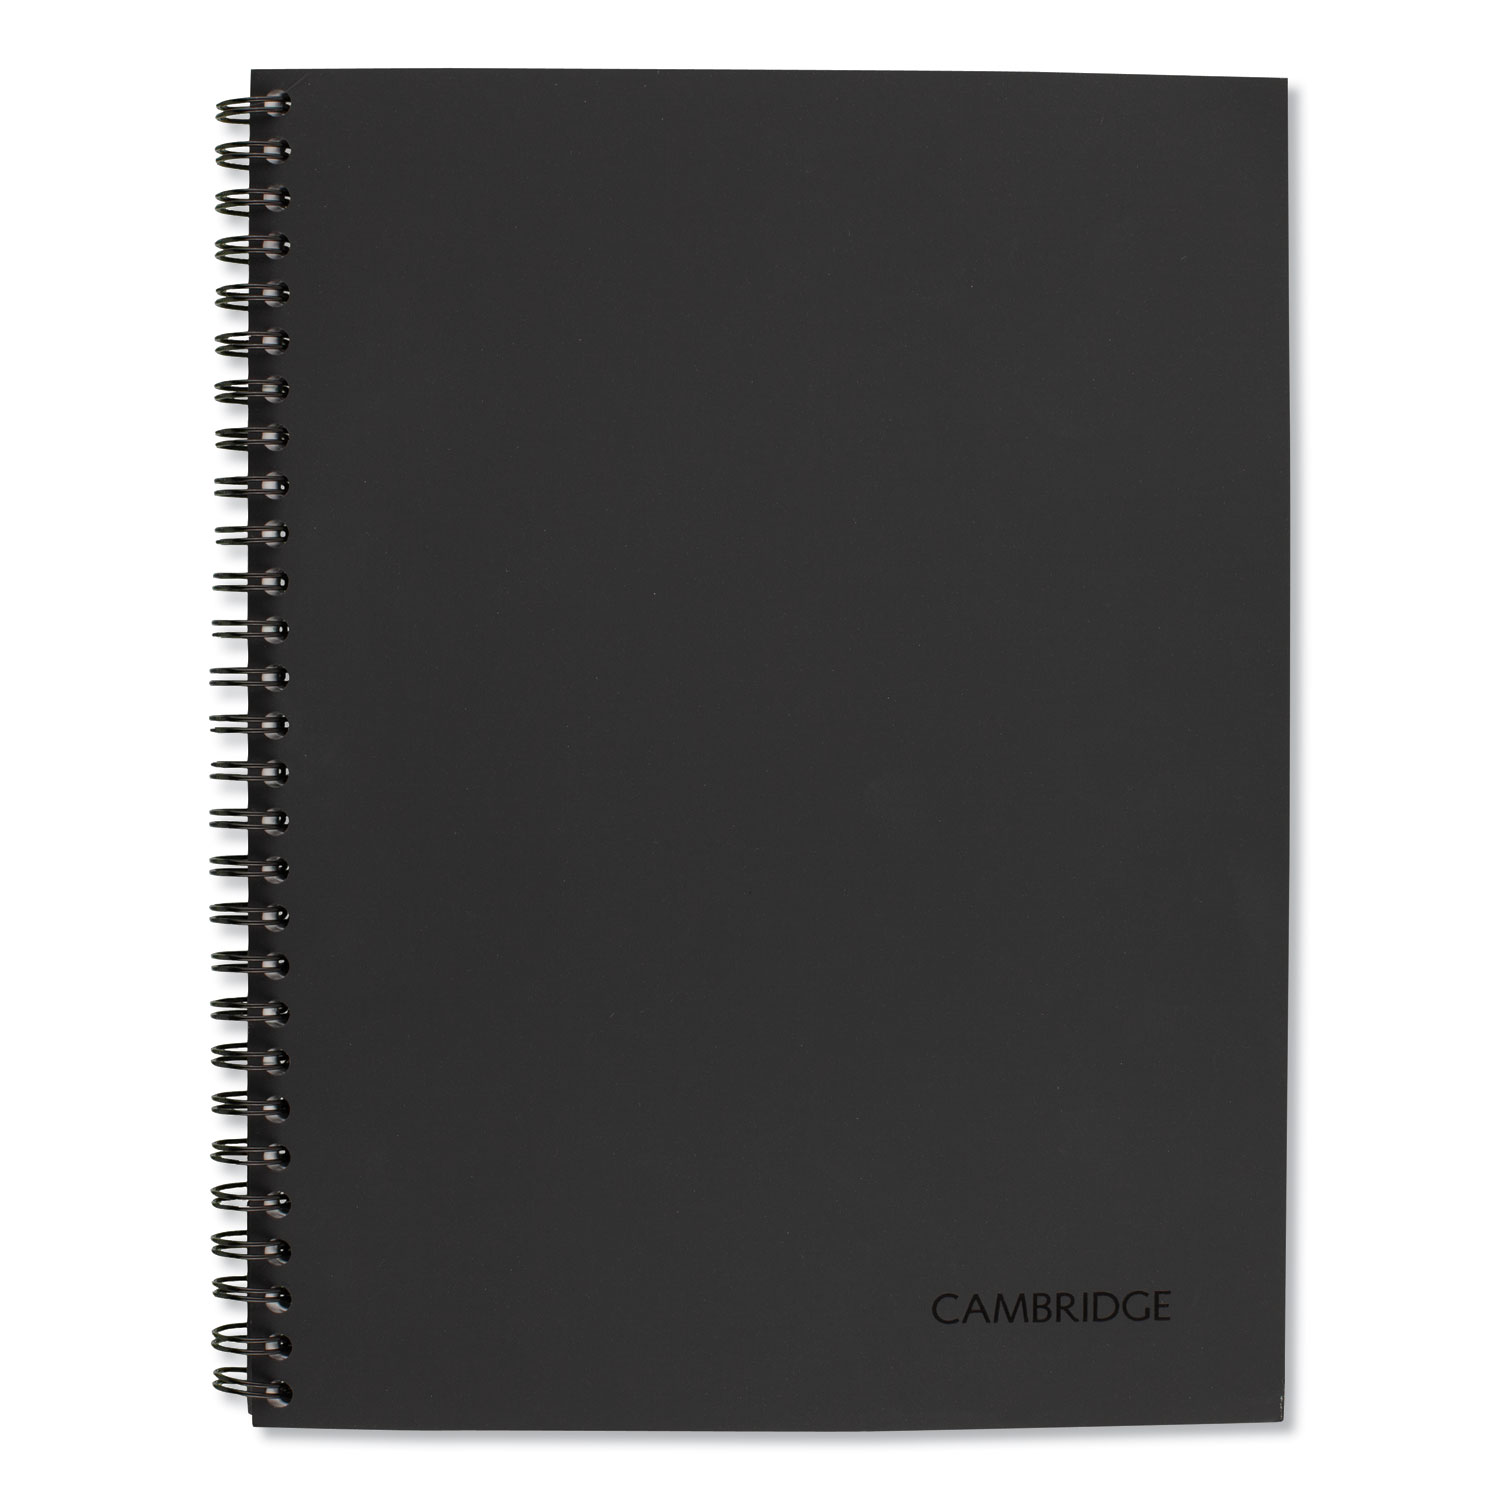  Cambridge 06122 Wirebound Action Planner Business Notebook, Dark Gray, 9.5 x 7.5, 80 Sheets (MEA06122) 